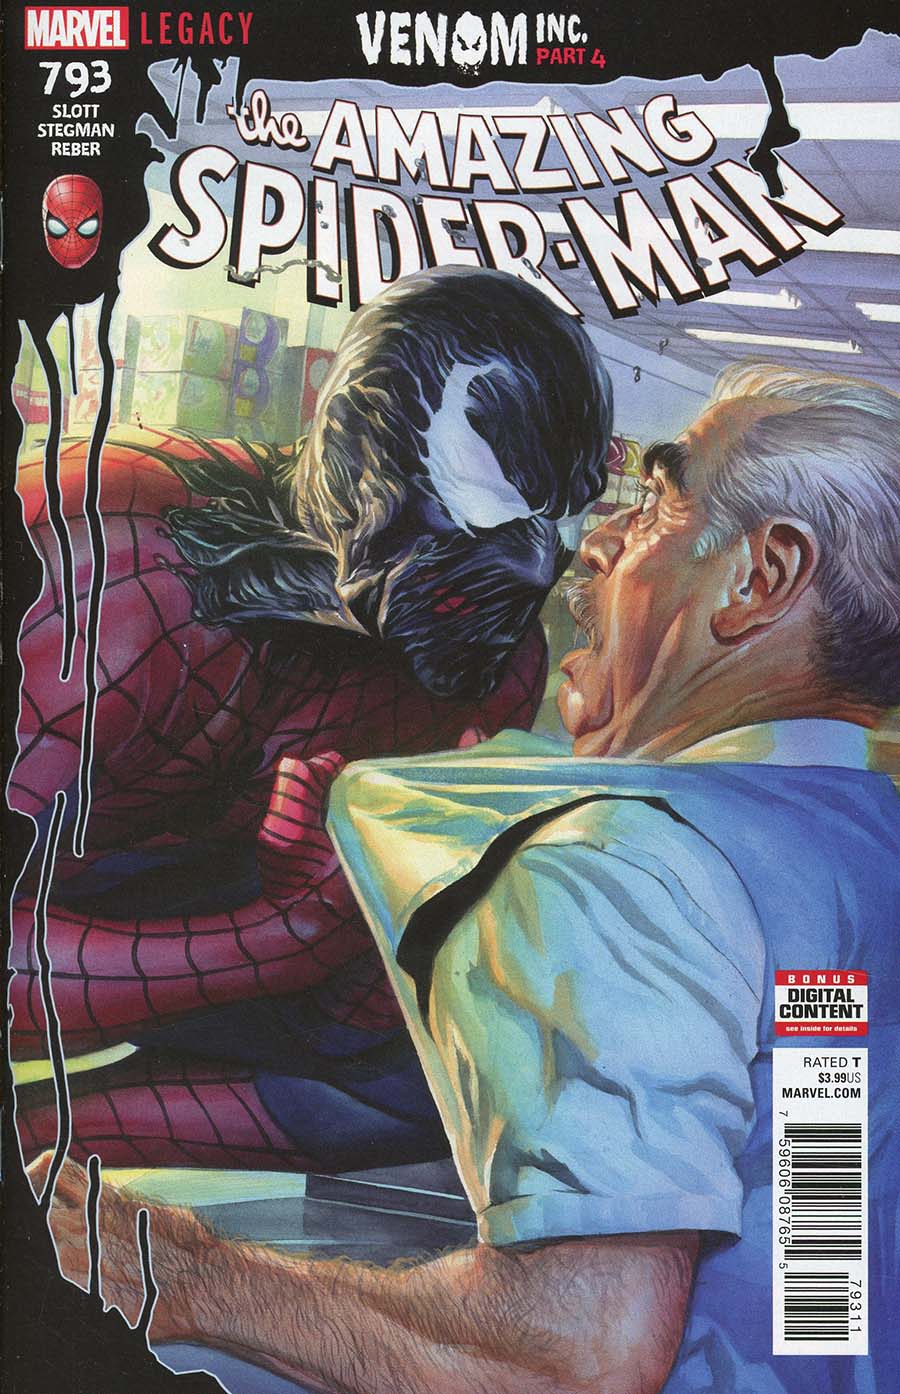 Amazing Spider-Man Vol 4 #793 Cover A 1st Ptg Regular Alex Ross Cover (Venom Inc Part 4)(Marvel Legacy Tie-In)